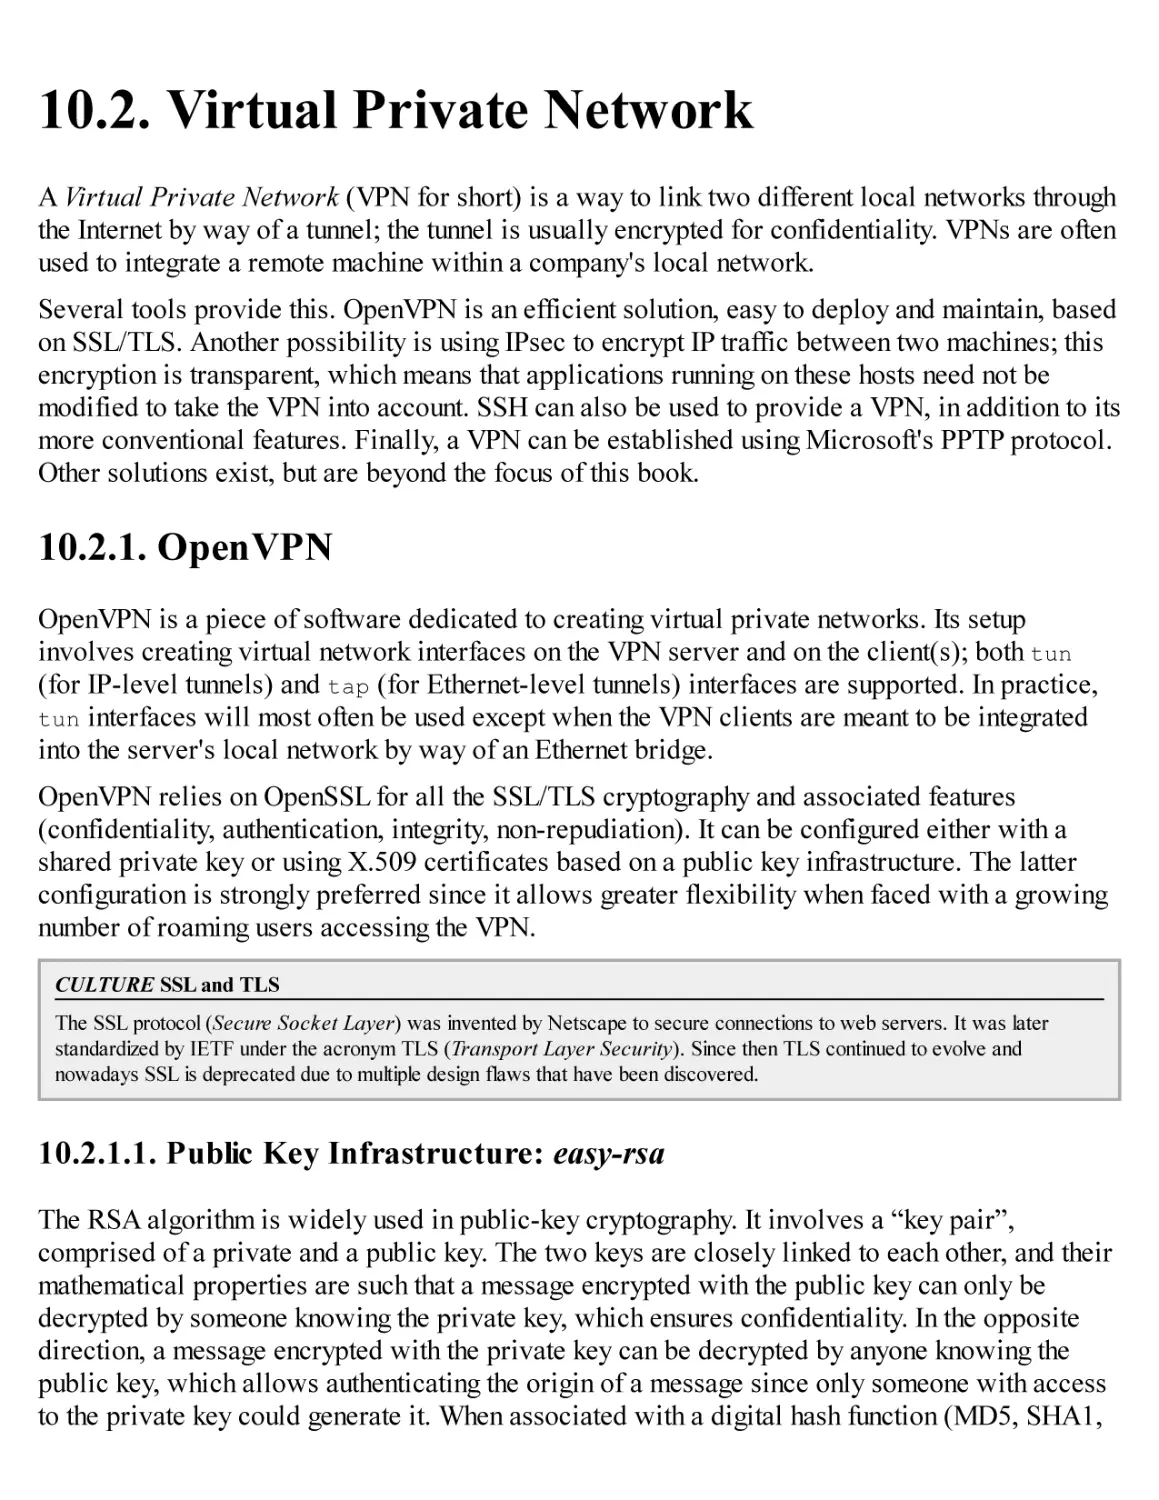 10.2. Virtual Private Network
10.2.1. OpenVPN
10.2.1.1. Public Key Infrastructure